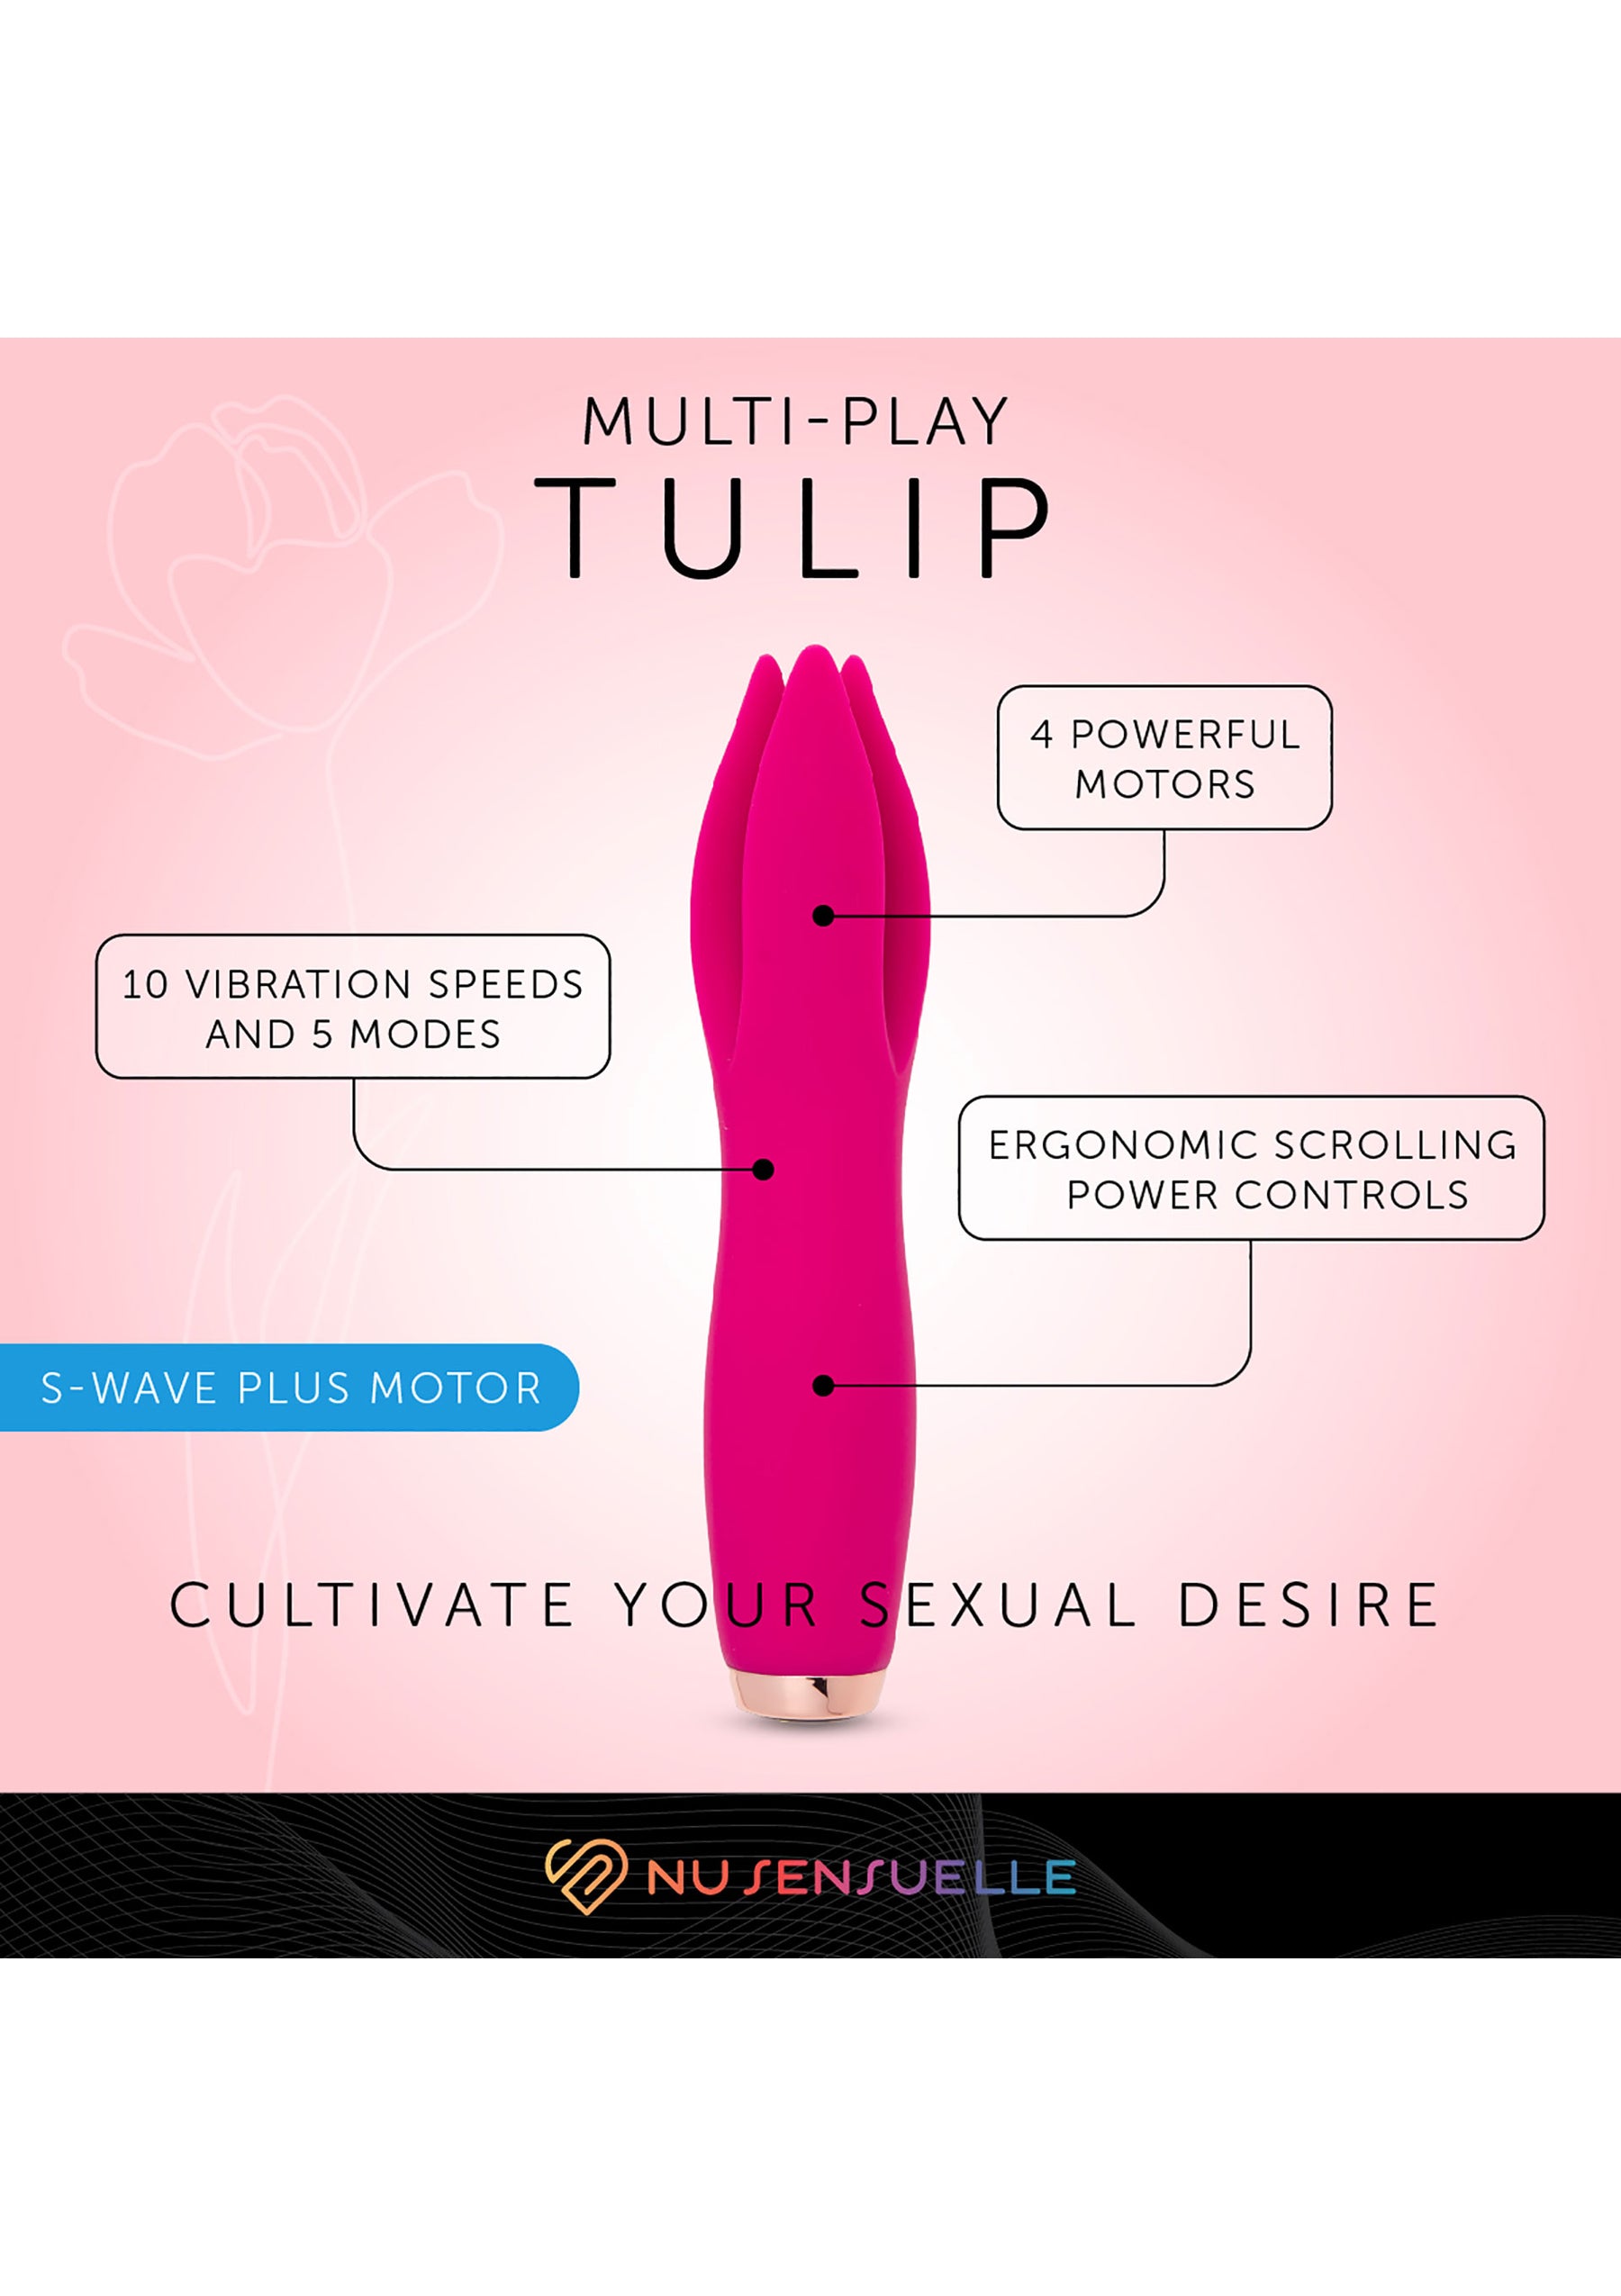 Tulip Multi-Play Vibe